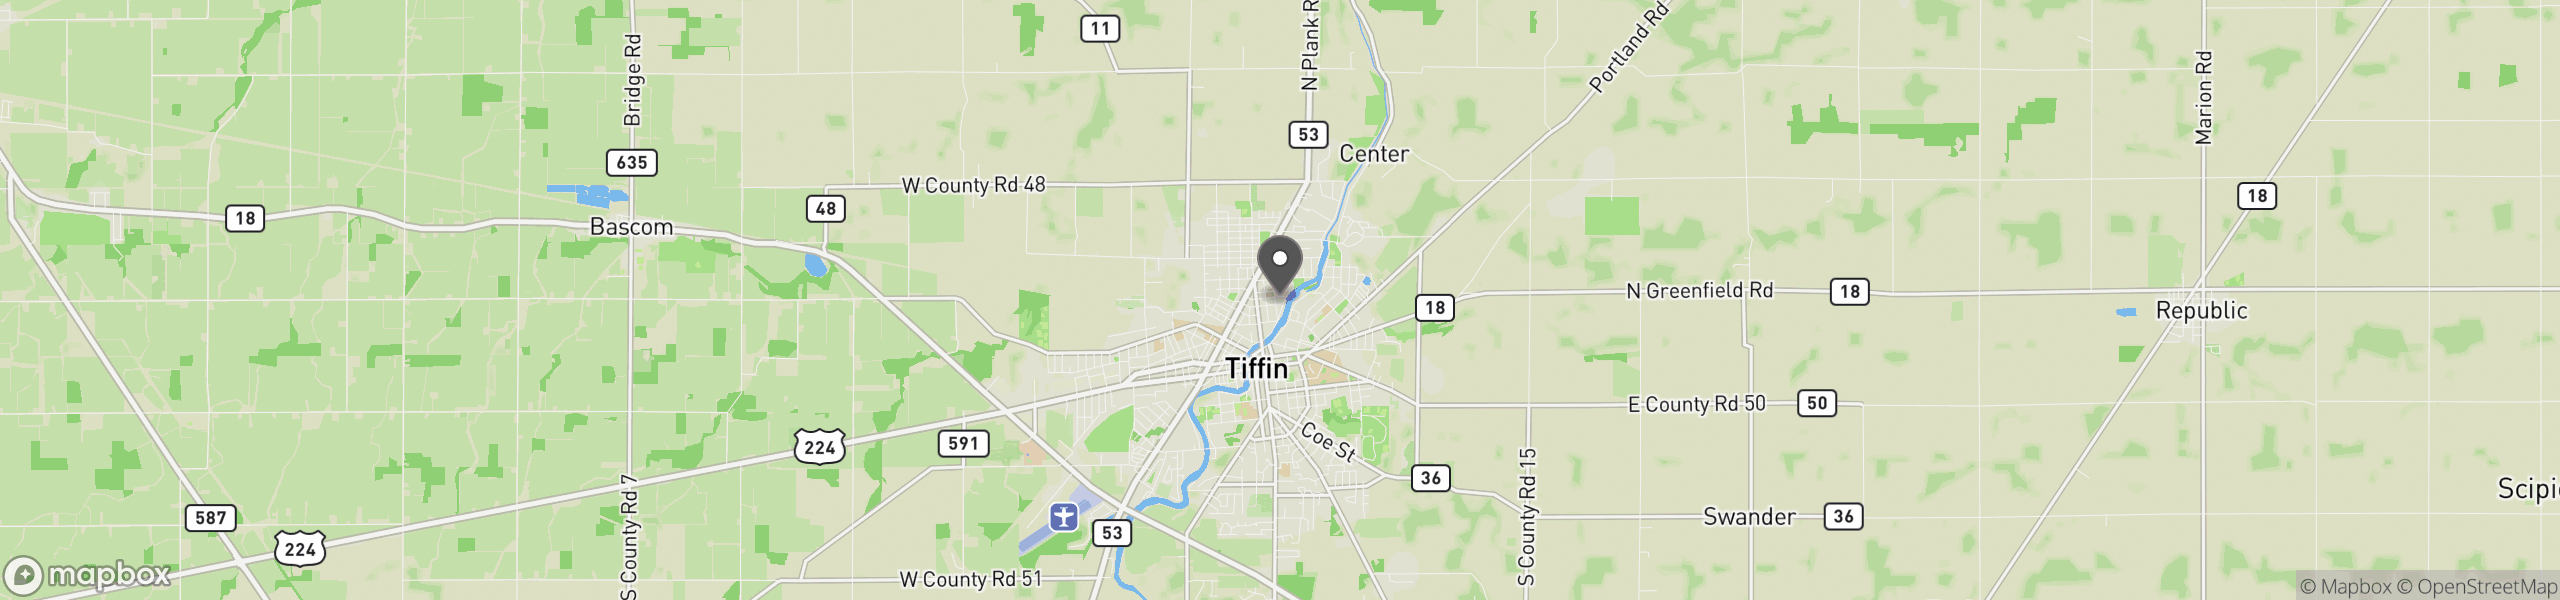 Tiffin, OH